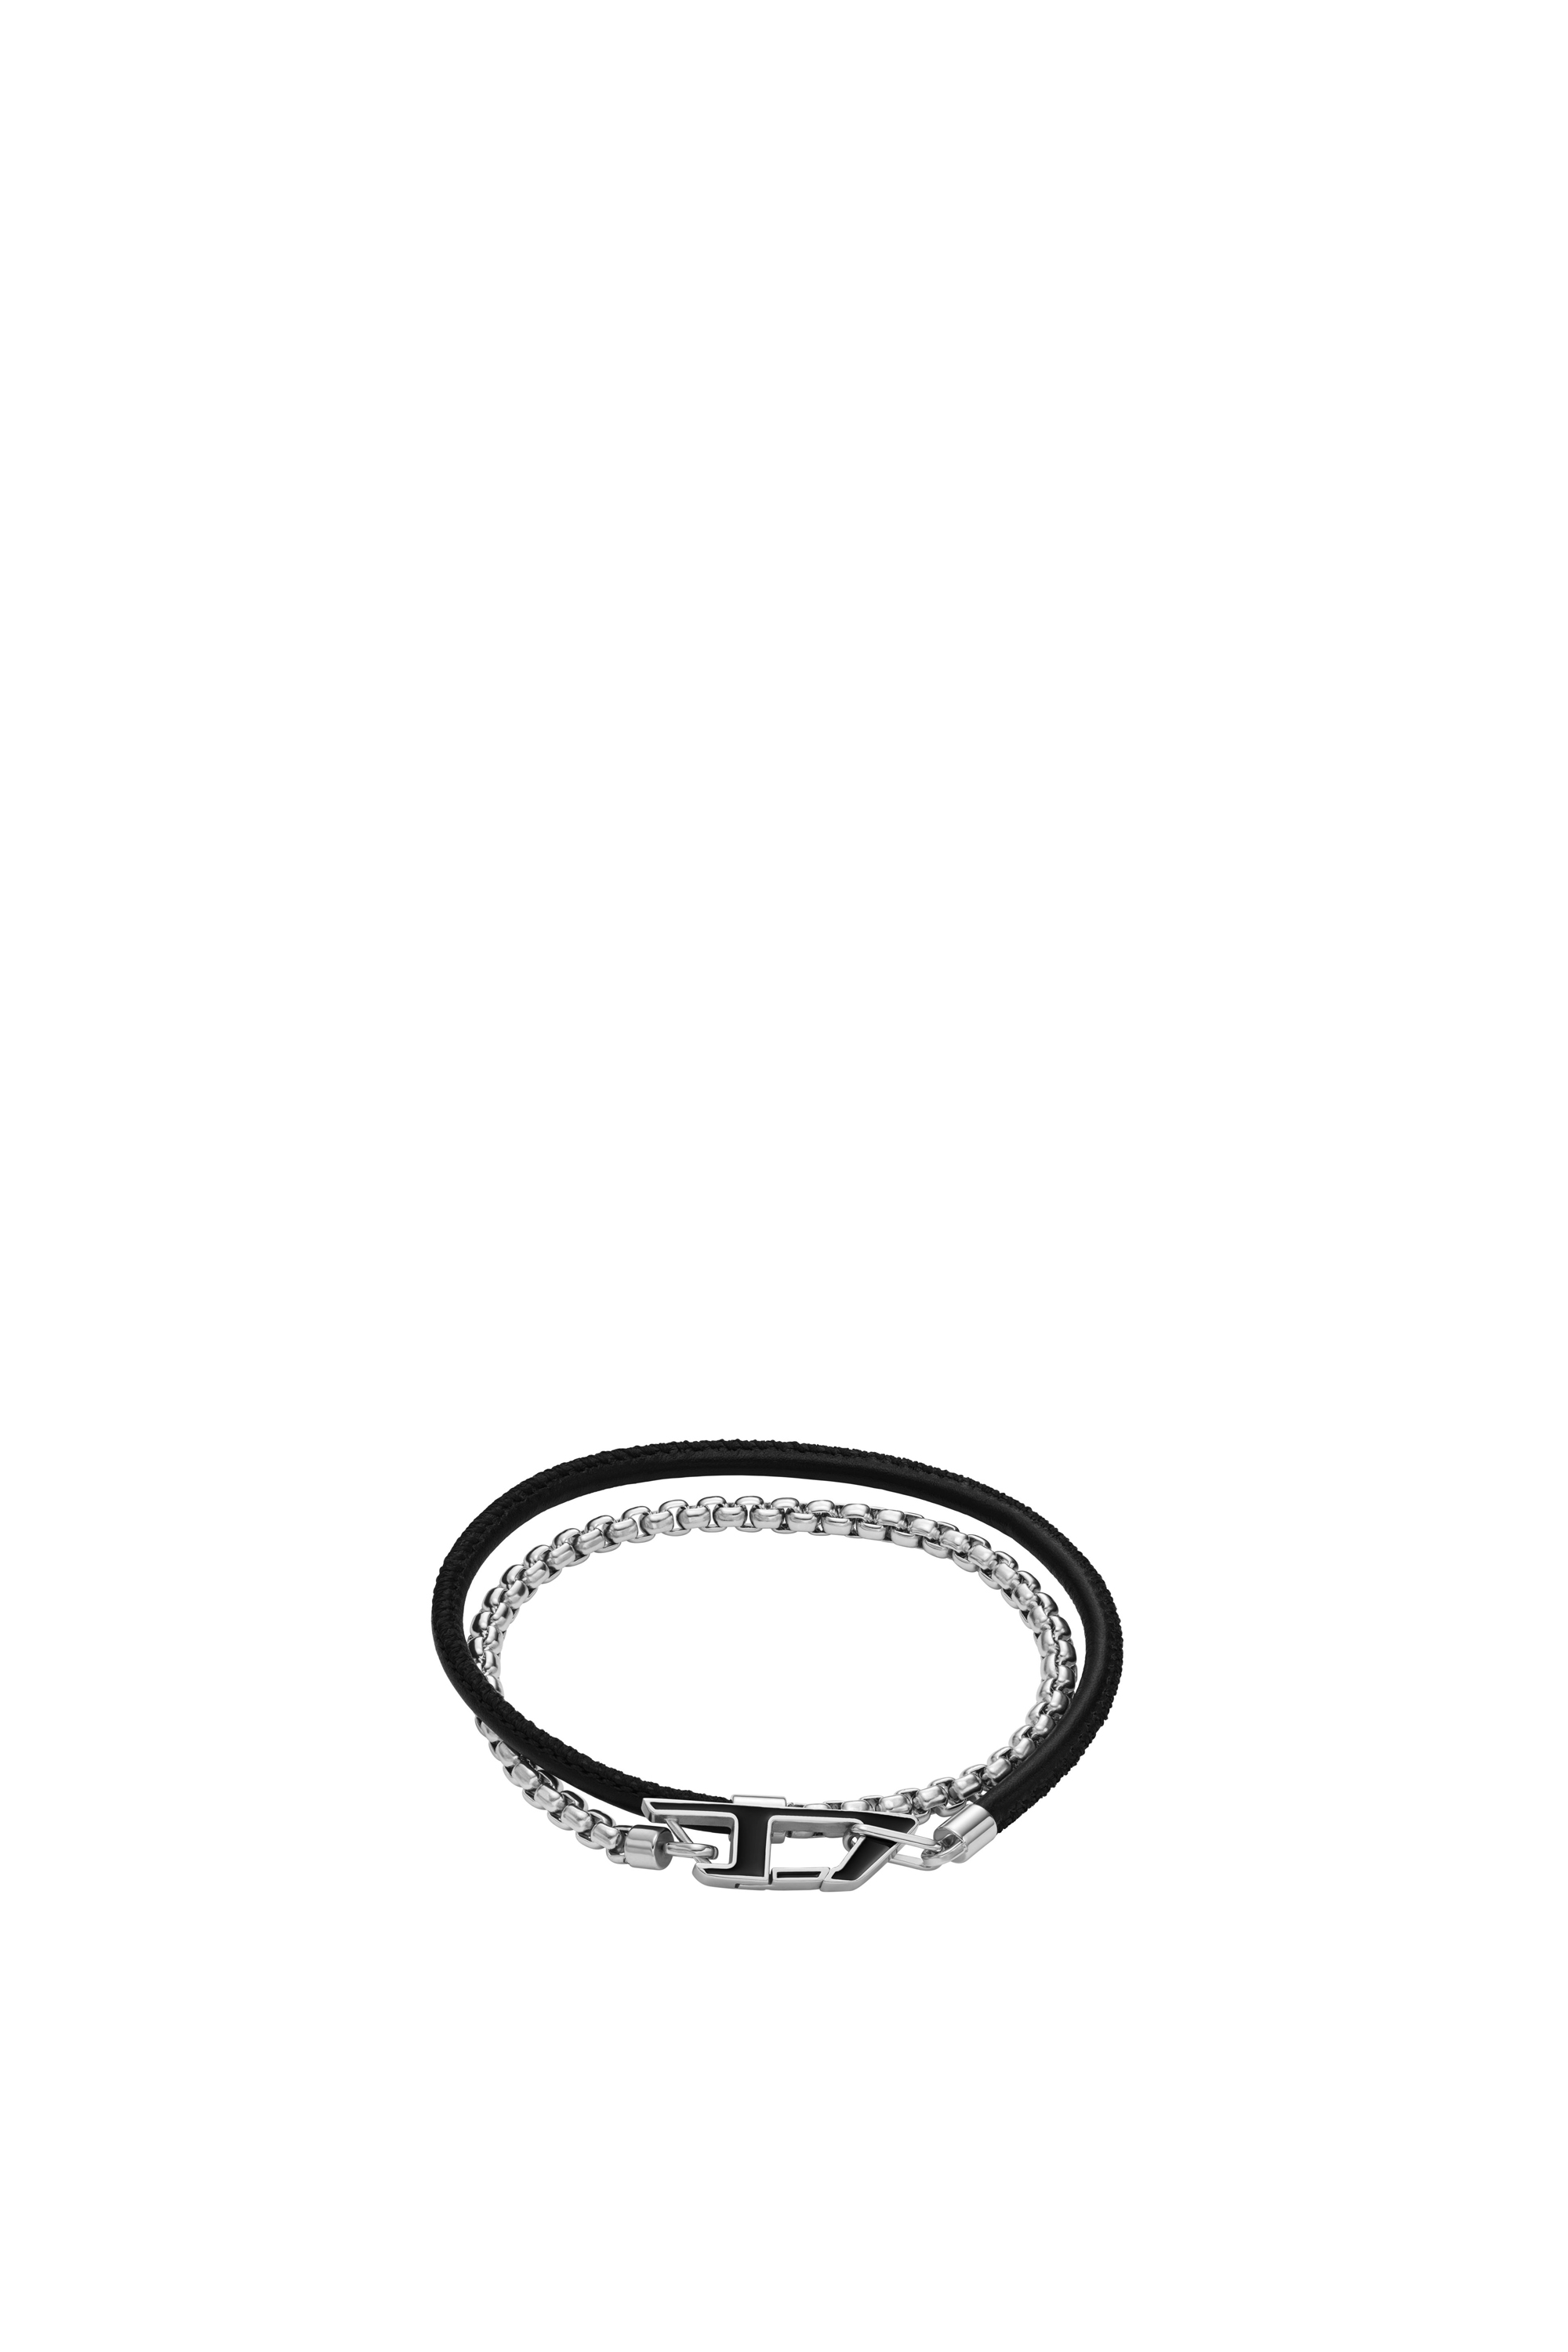 Diesel Stainless Steel Chain Bracelet In Silver